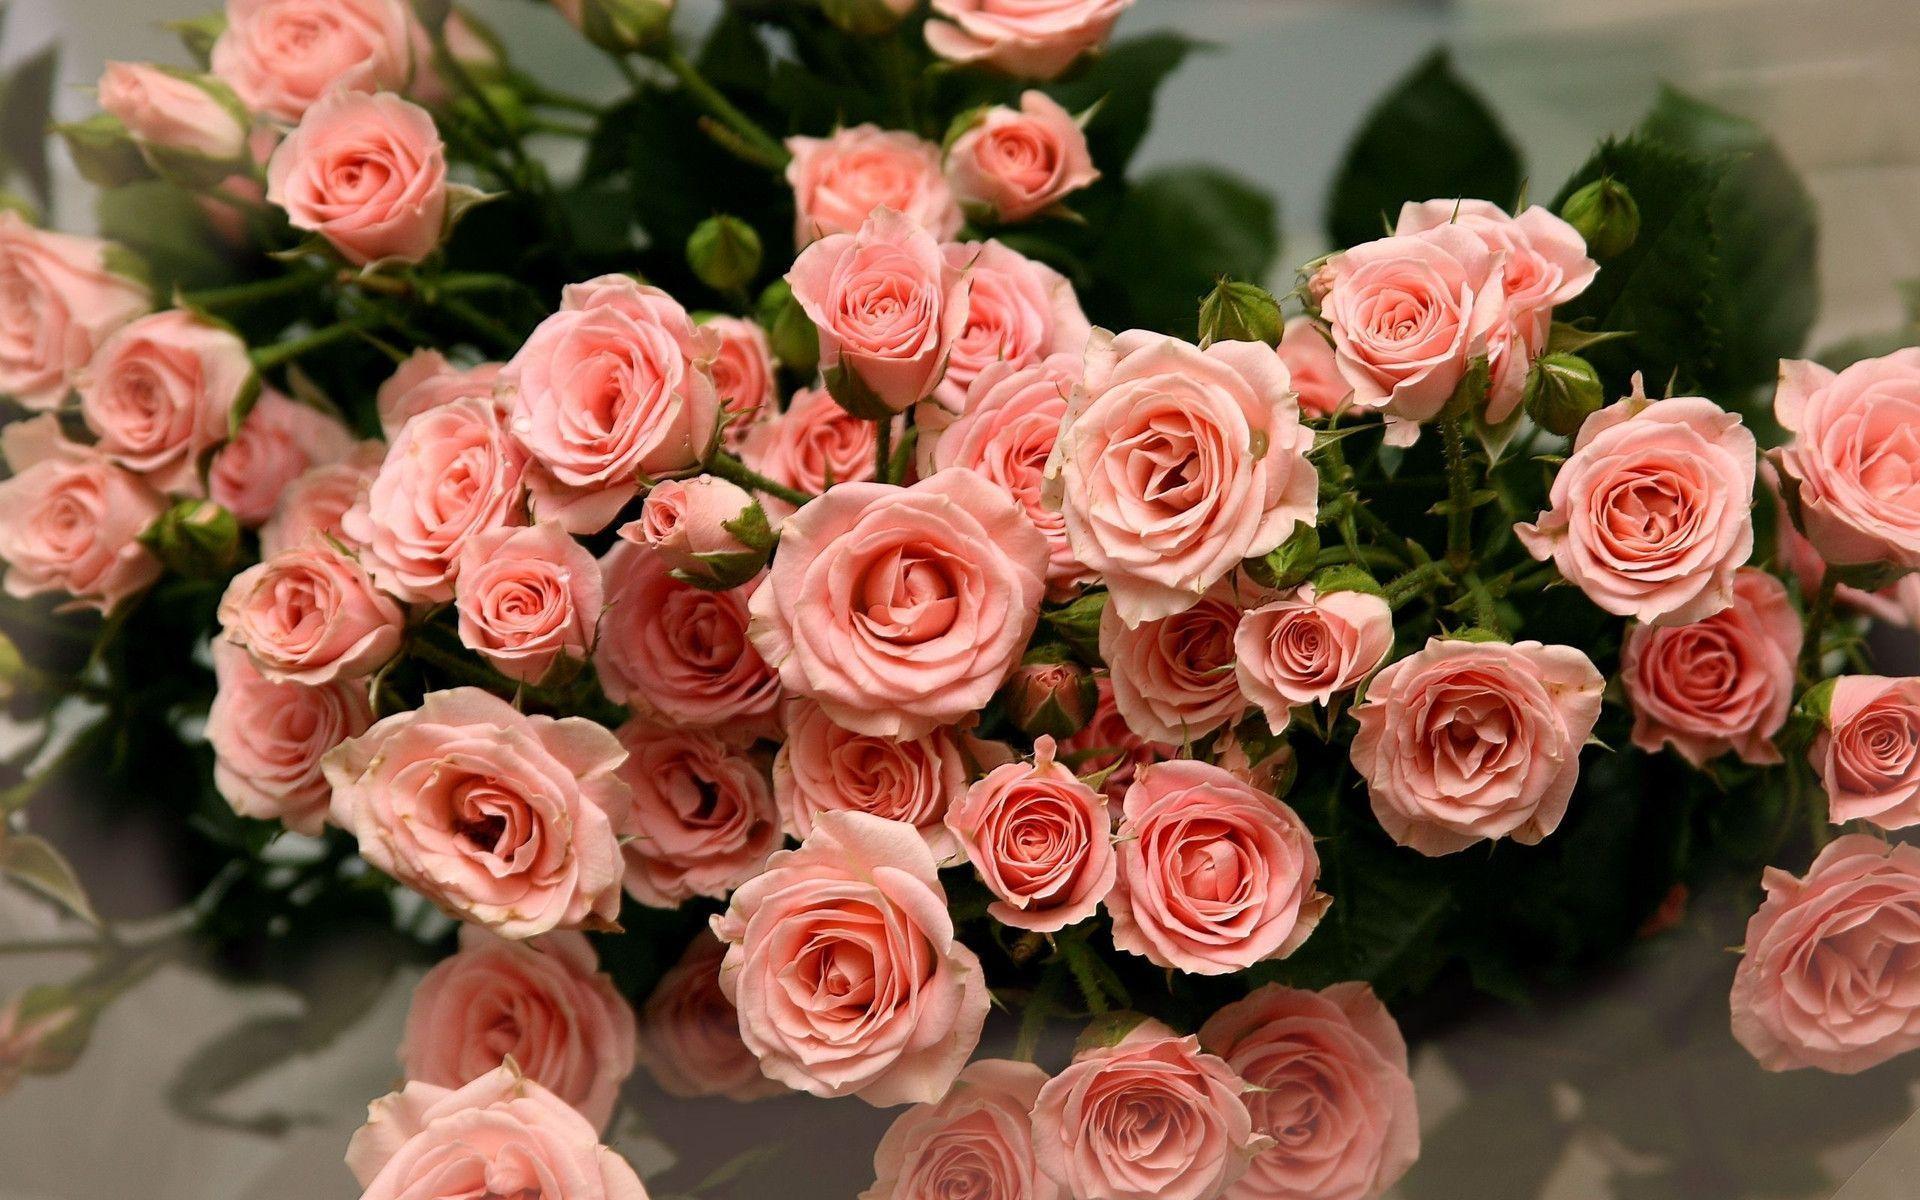 Hd Images Of Pink Rose Flower Best Flower Site